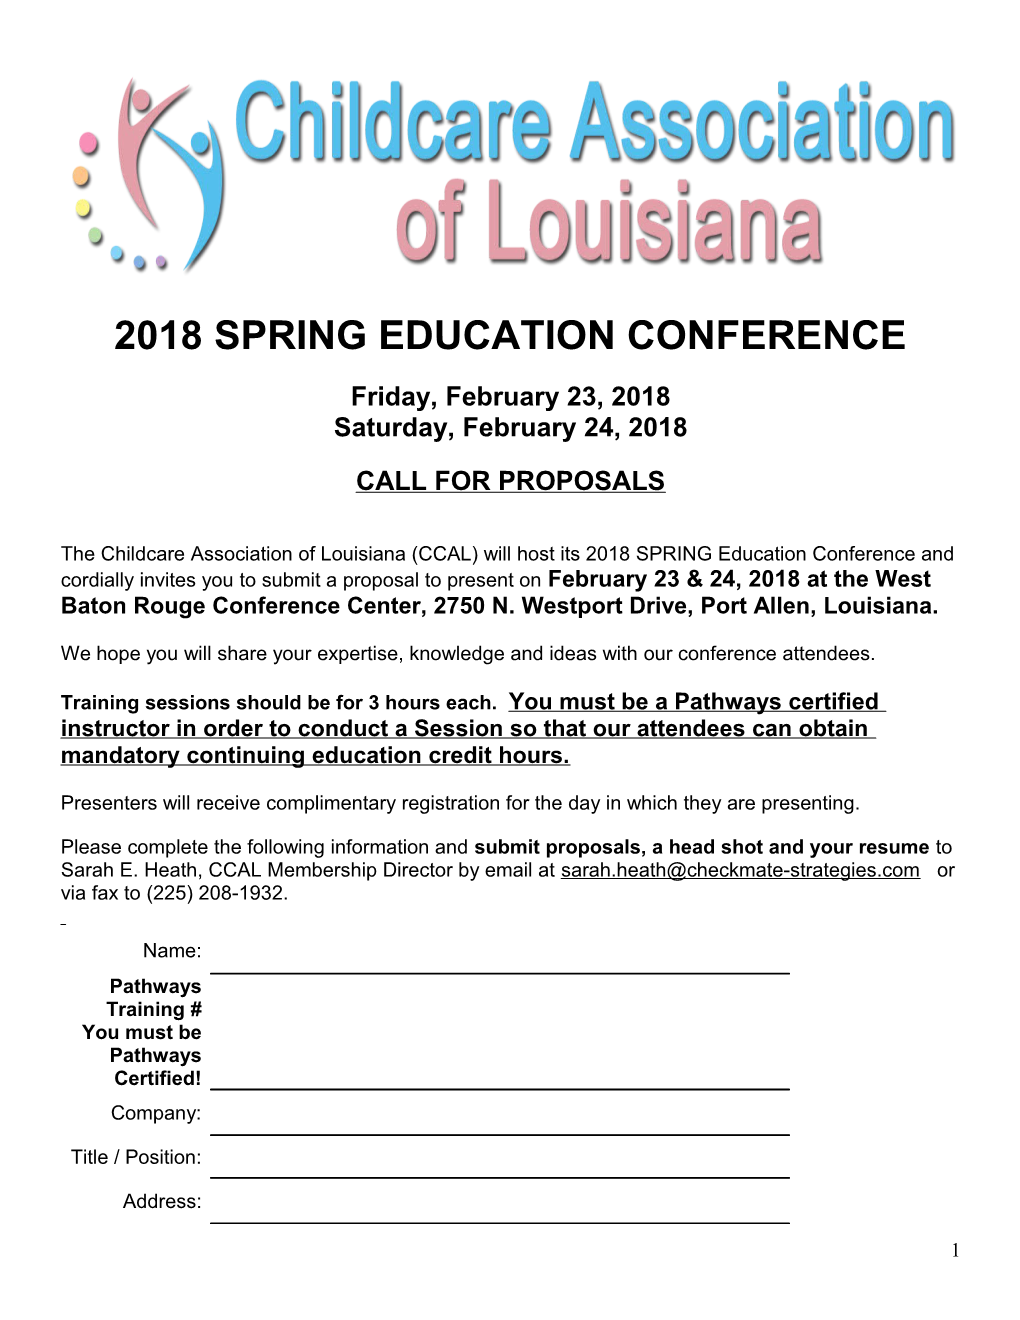 Childcare Association of Louisiana